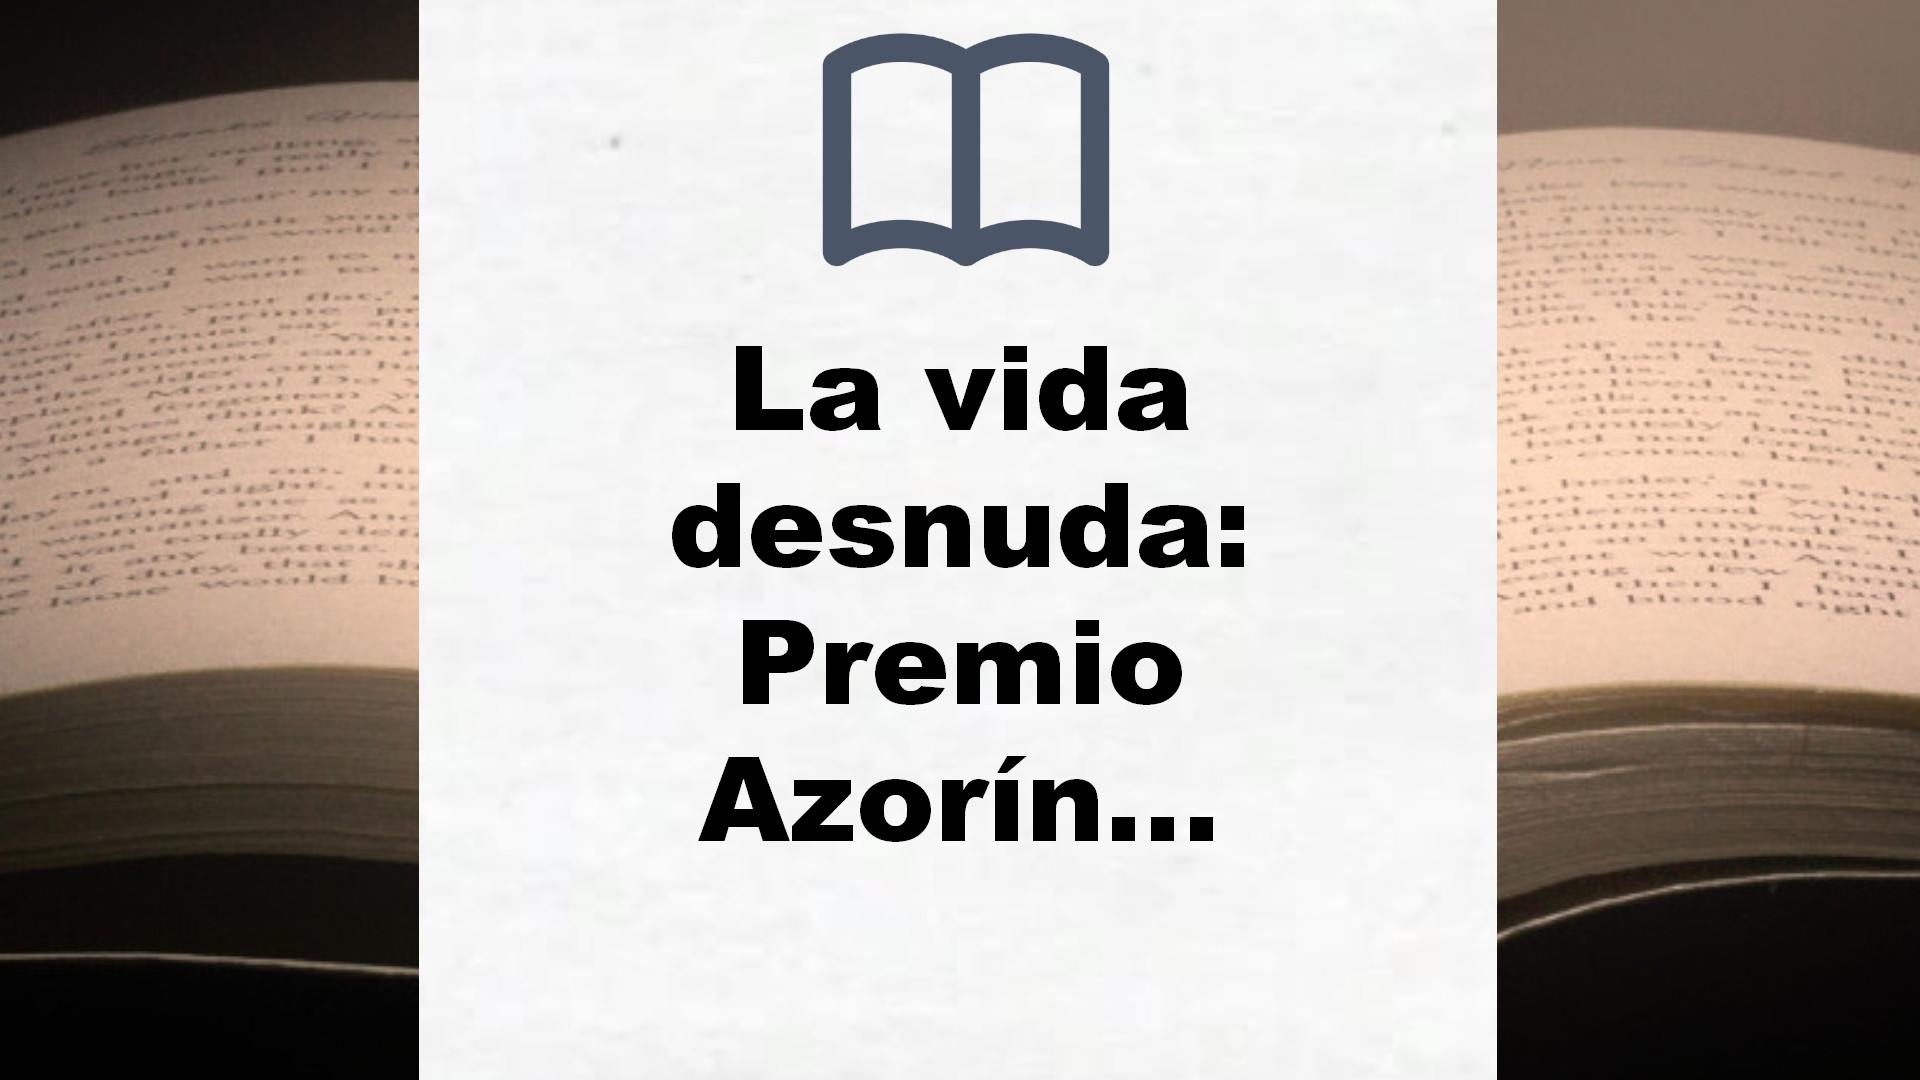 La vida desnuda: Premio Azorín de Novela 2020 (Autores Españoles e Iberoamericanos) – Reseña del libro